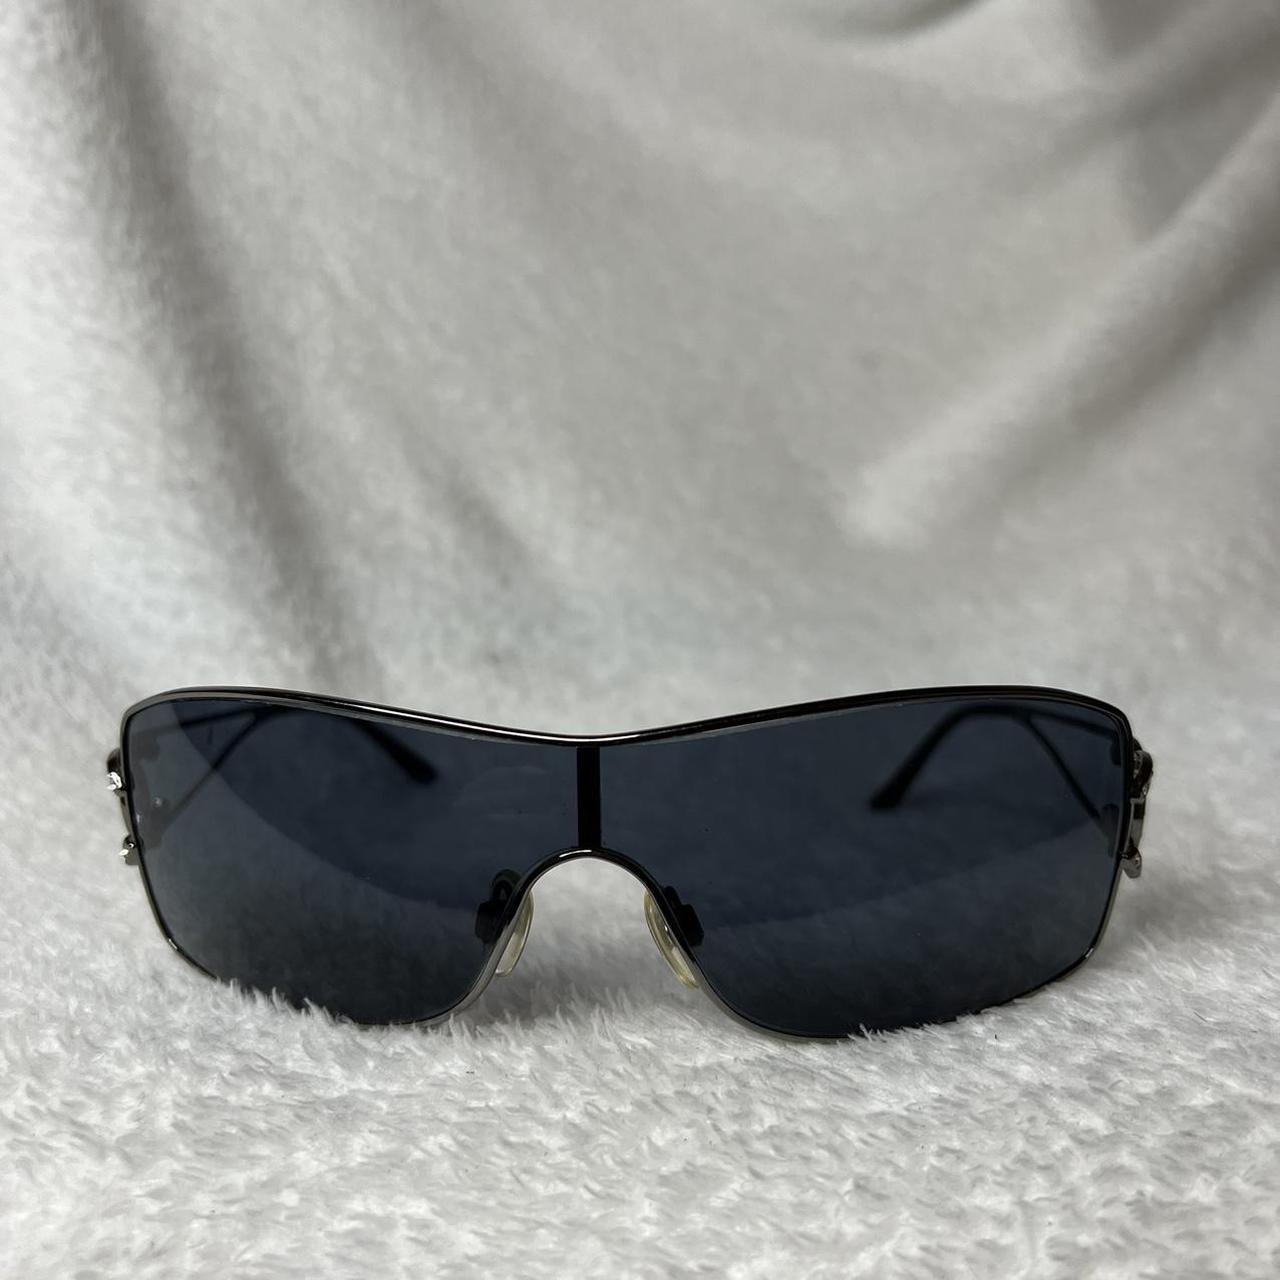 Vintage Chanel sunglasses with rhinestones and black